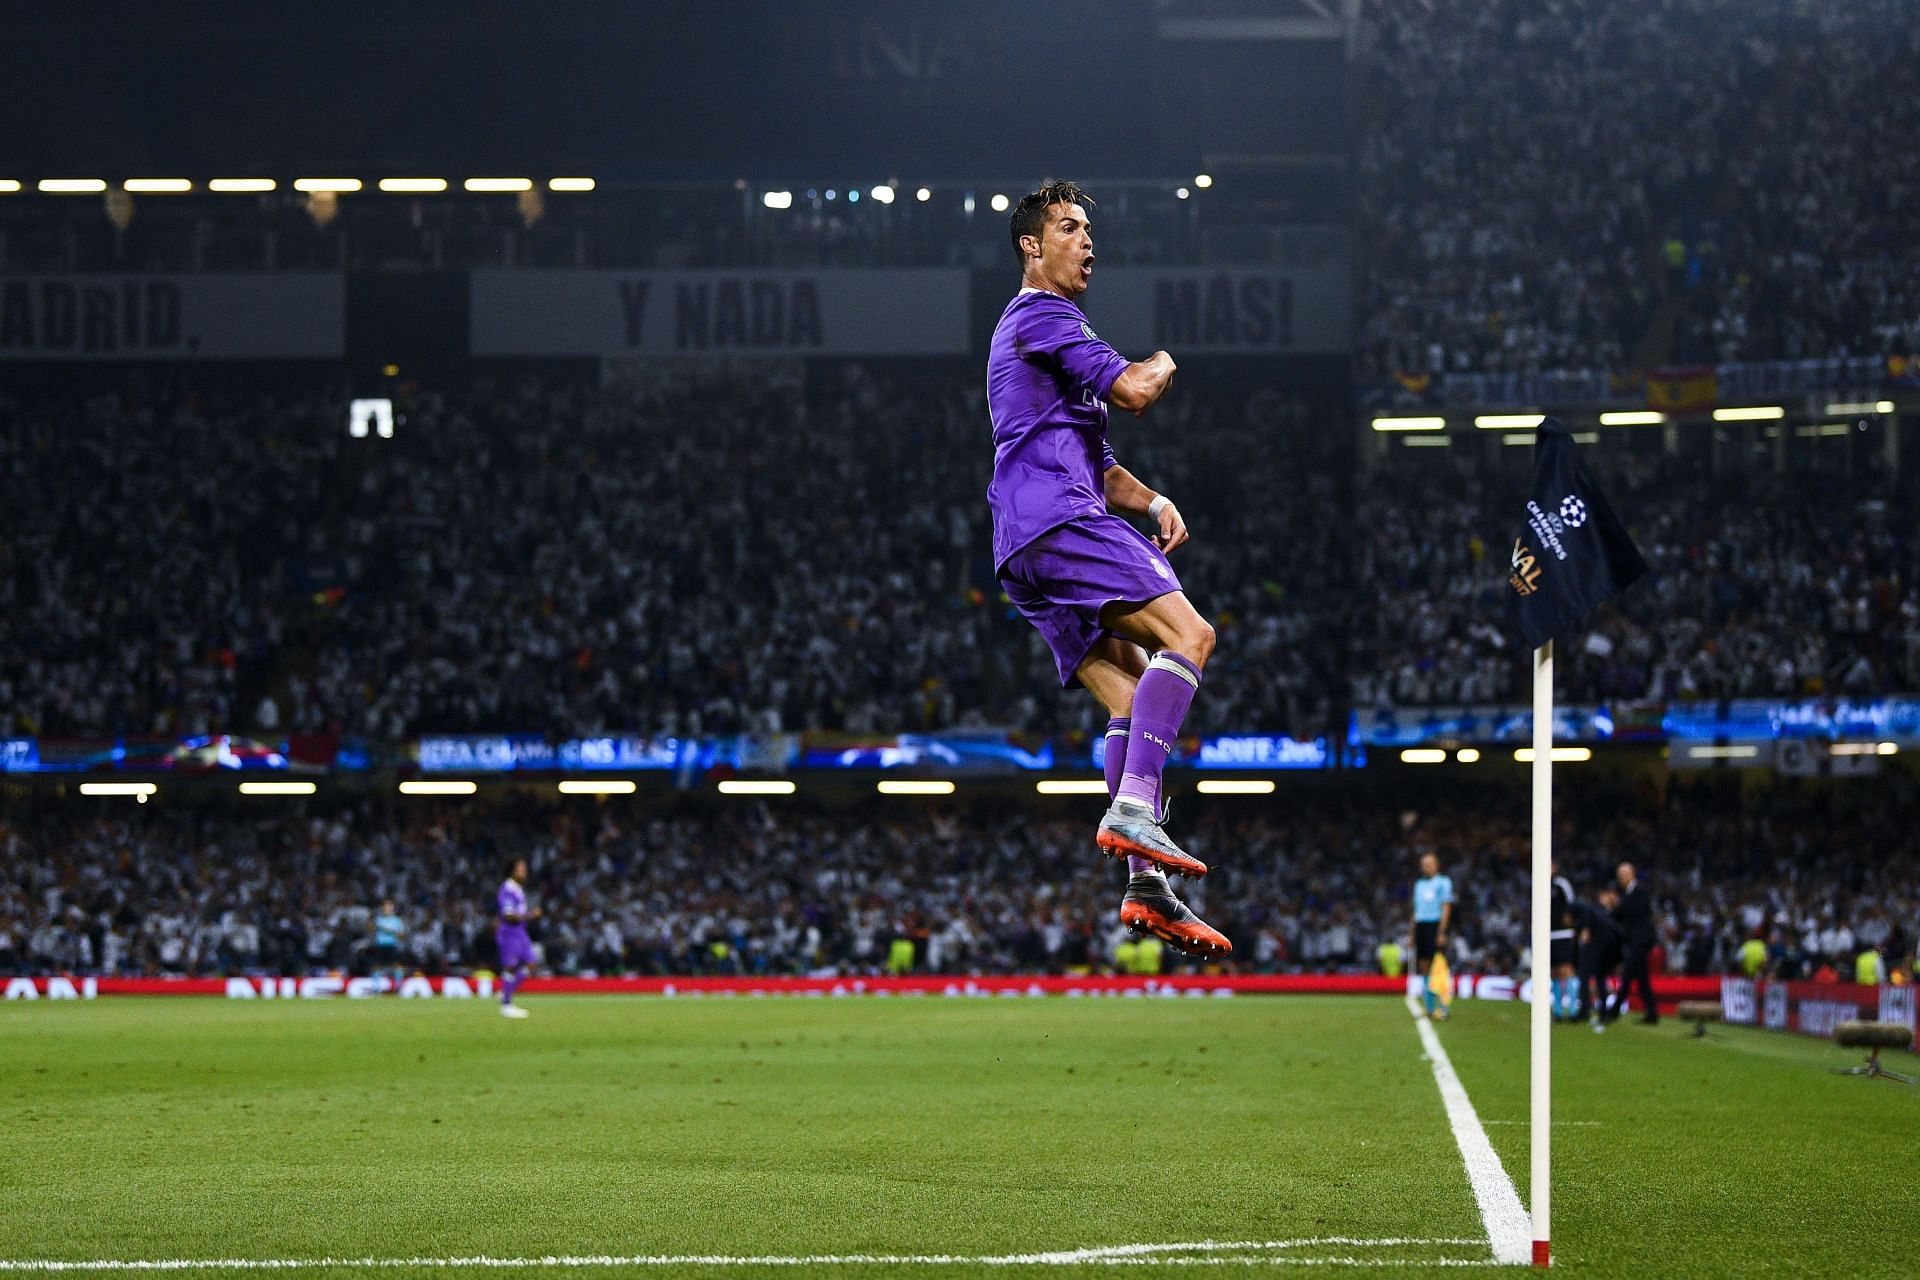 Juventus v Real Madrid - Ronaldo hits his trademark celebration